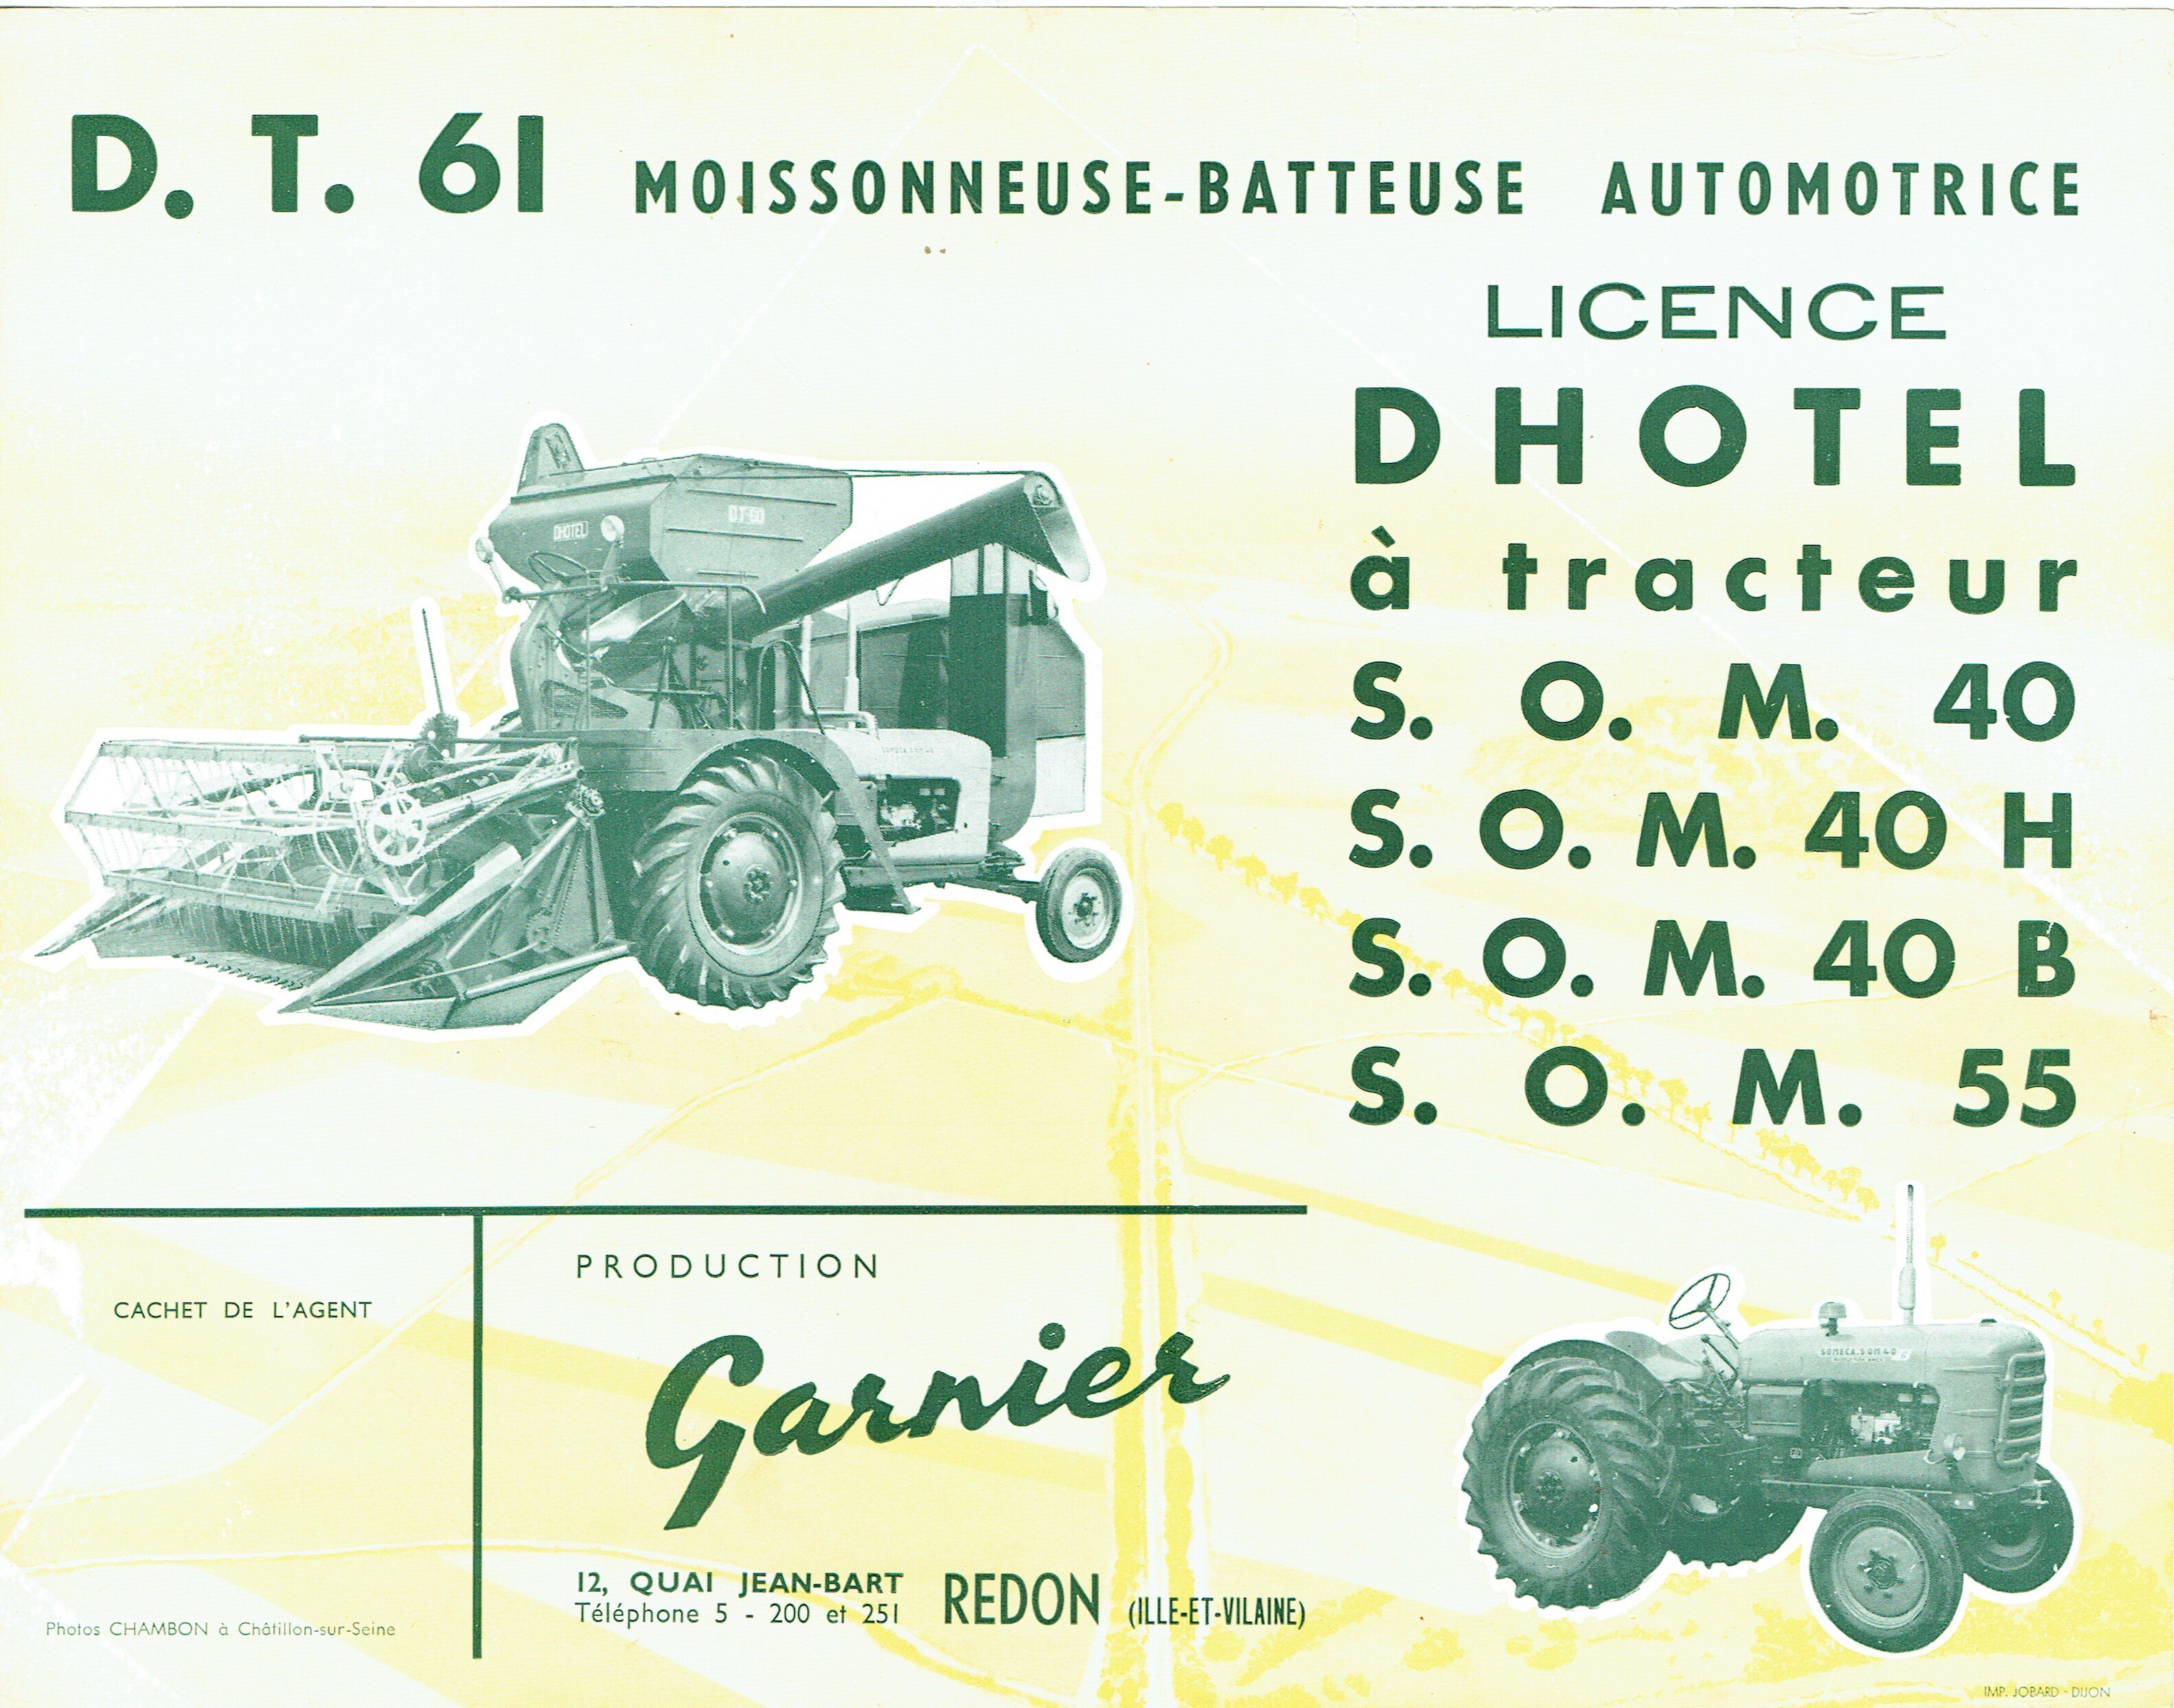 GARNIER-DHOTEL D.T.60 / D.T.61 (Mähdrescherarchiv Kühnstetter CC BY-NC-SA)